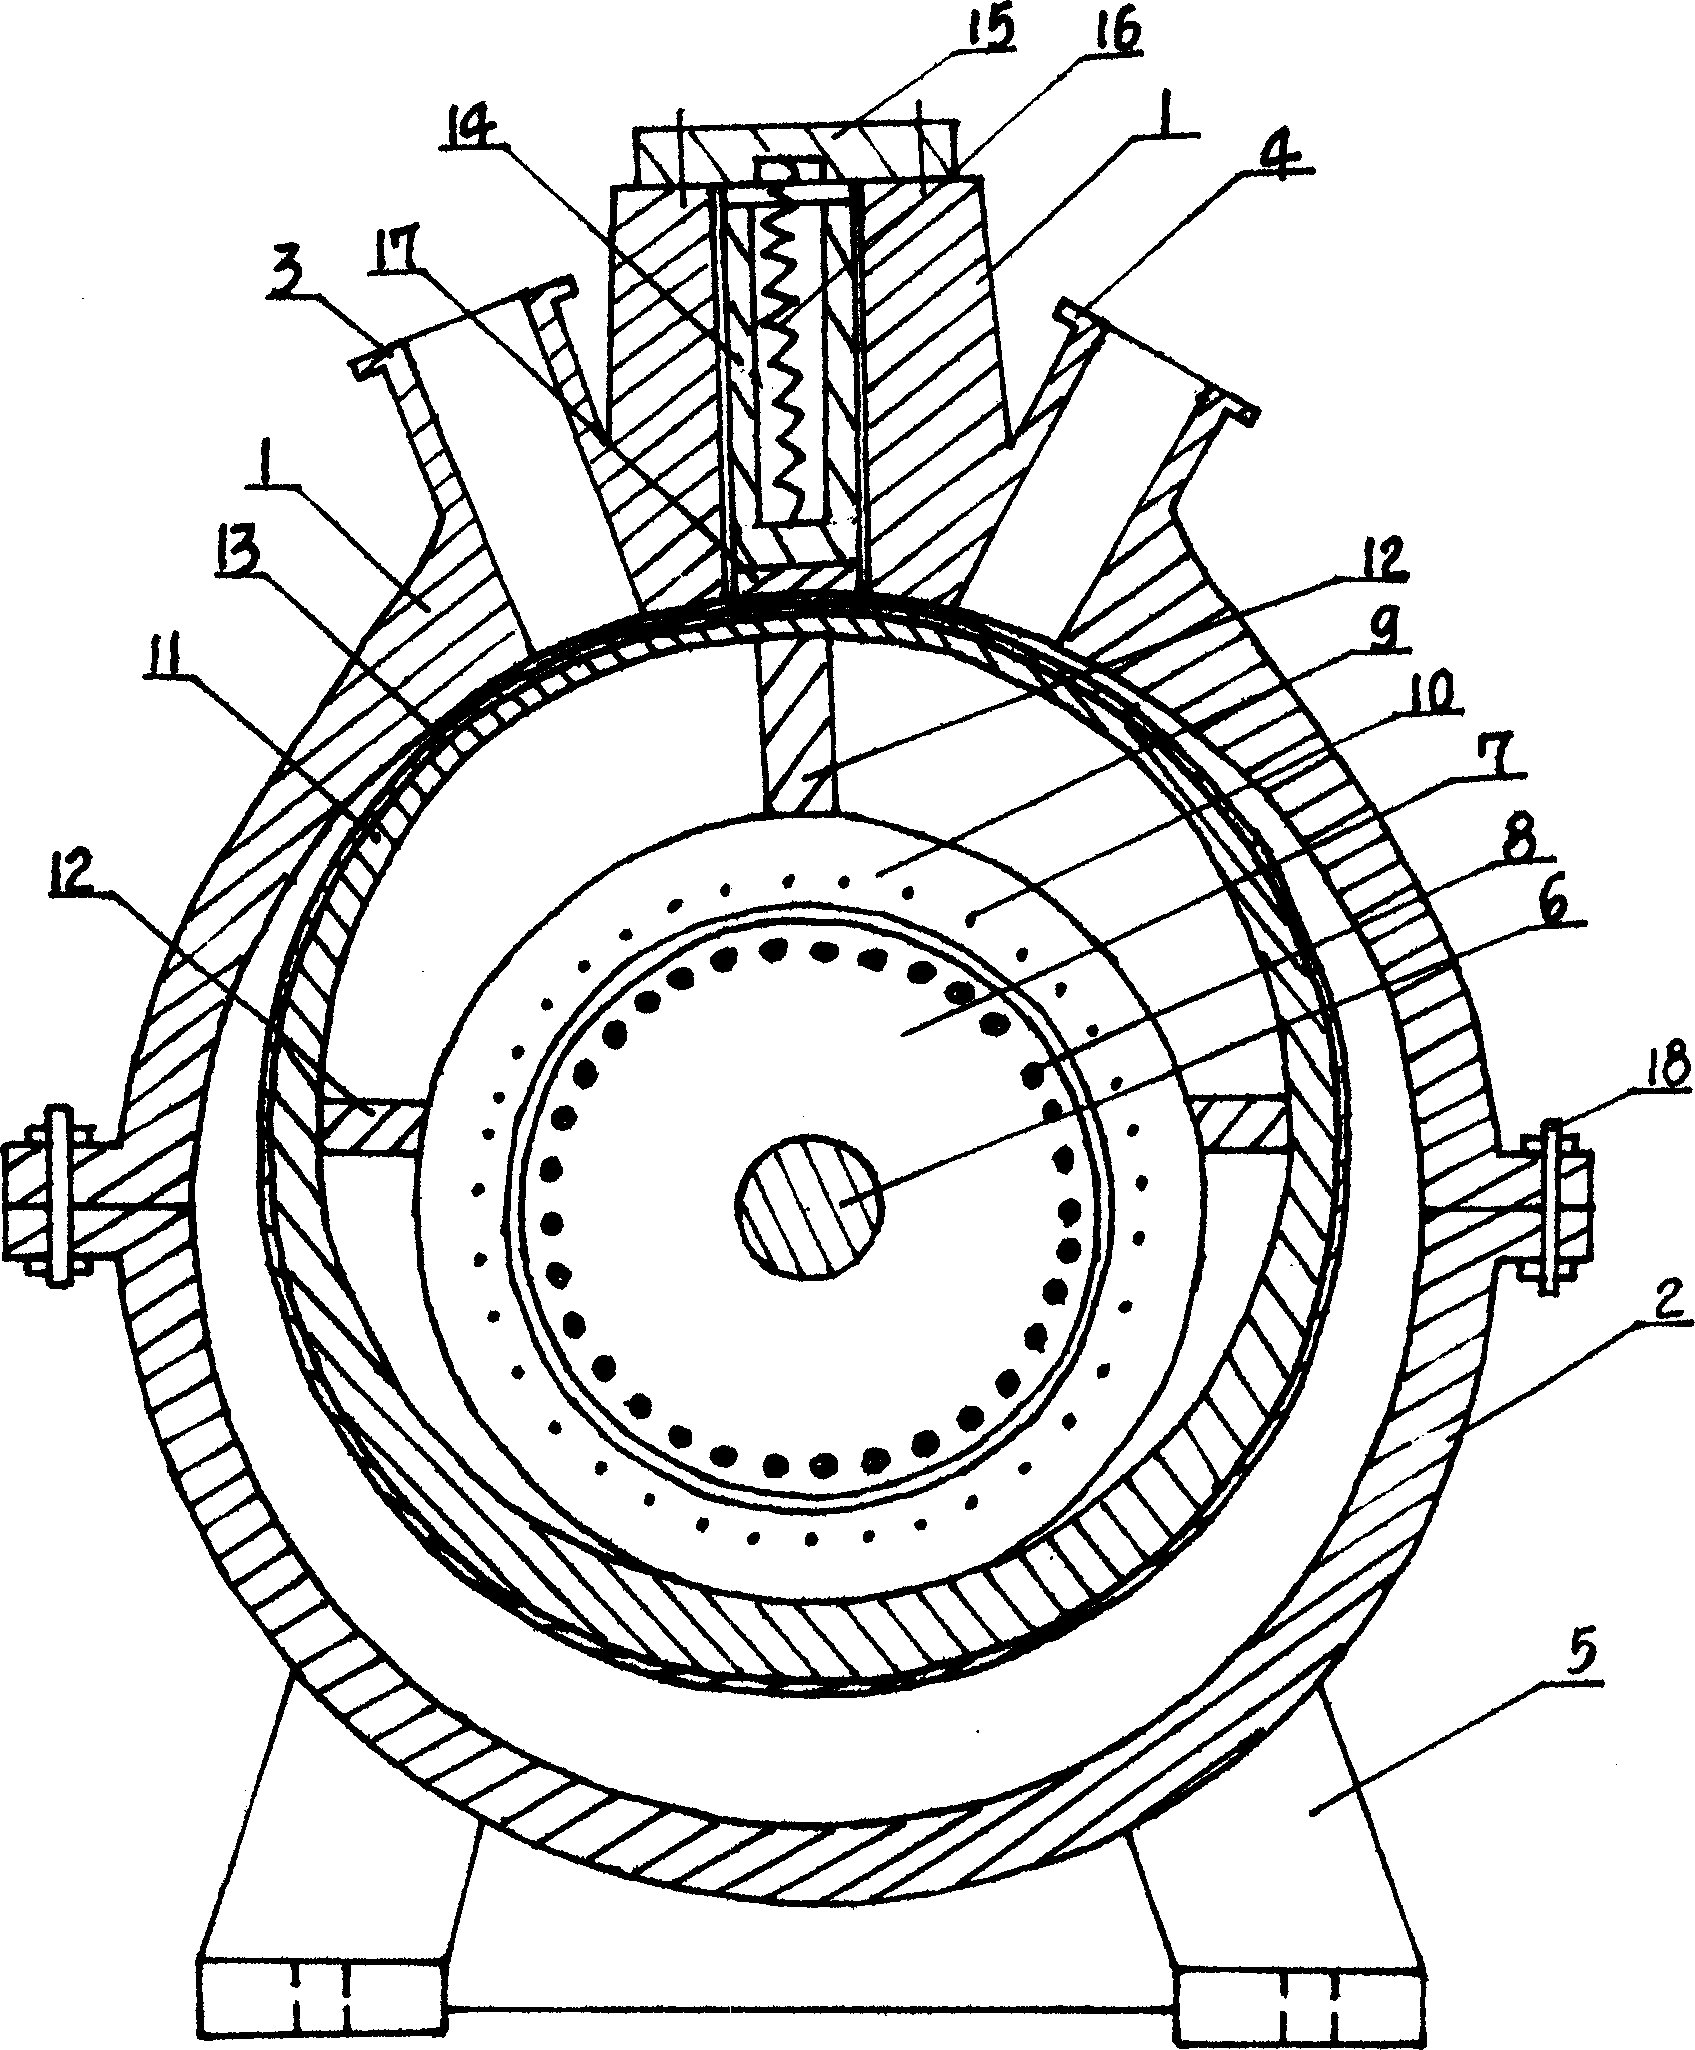 Efficient electromechanical rotor pump